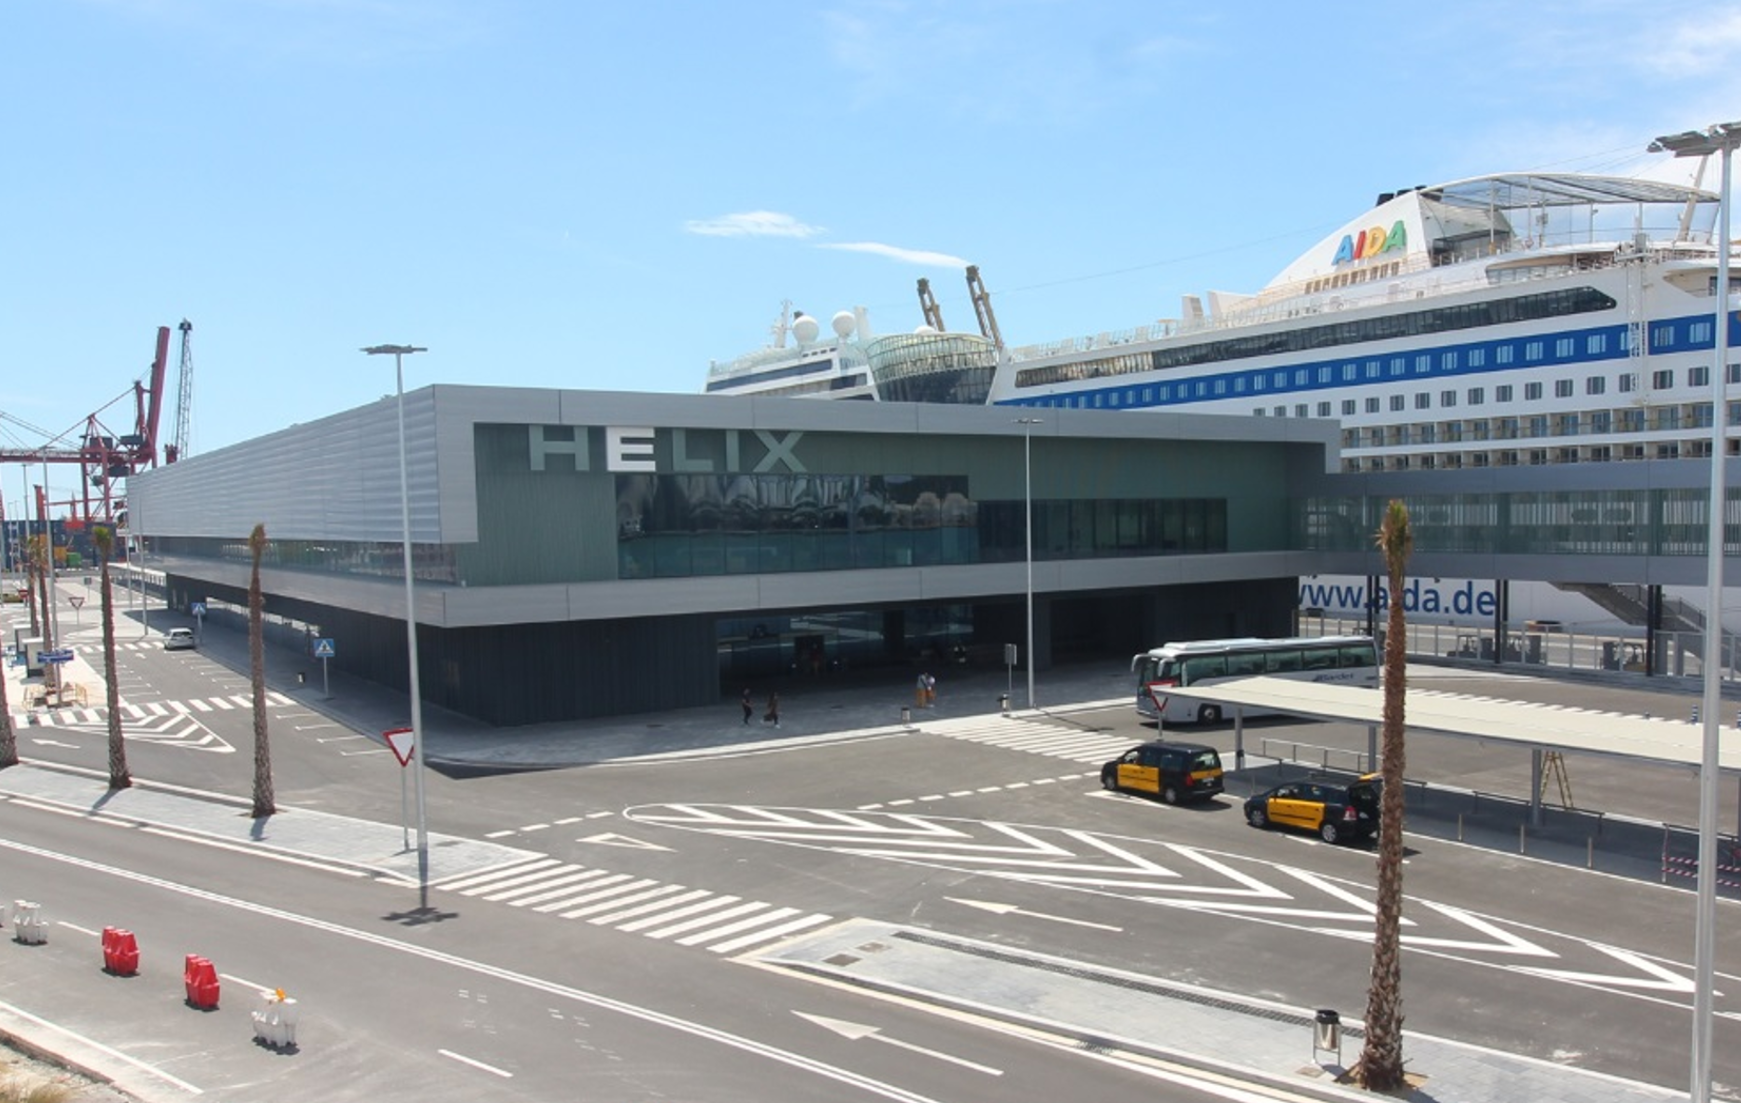 bct barcelona cruise terminal